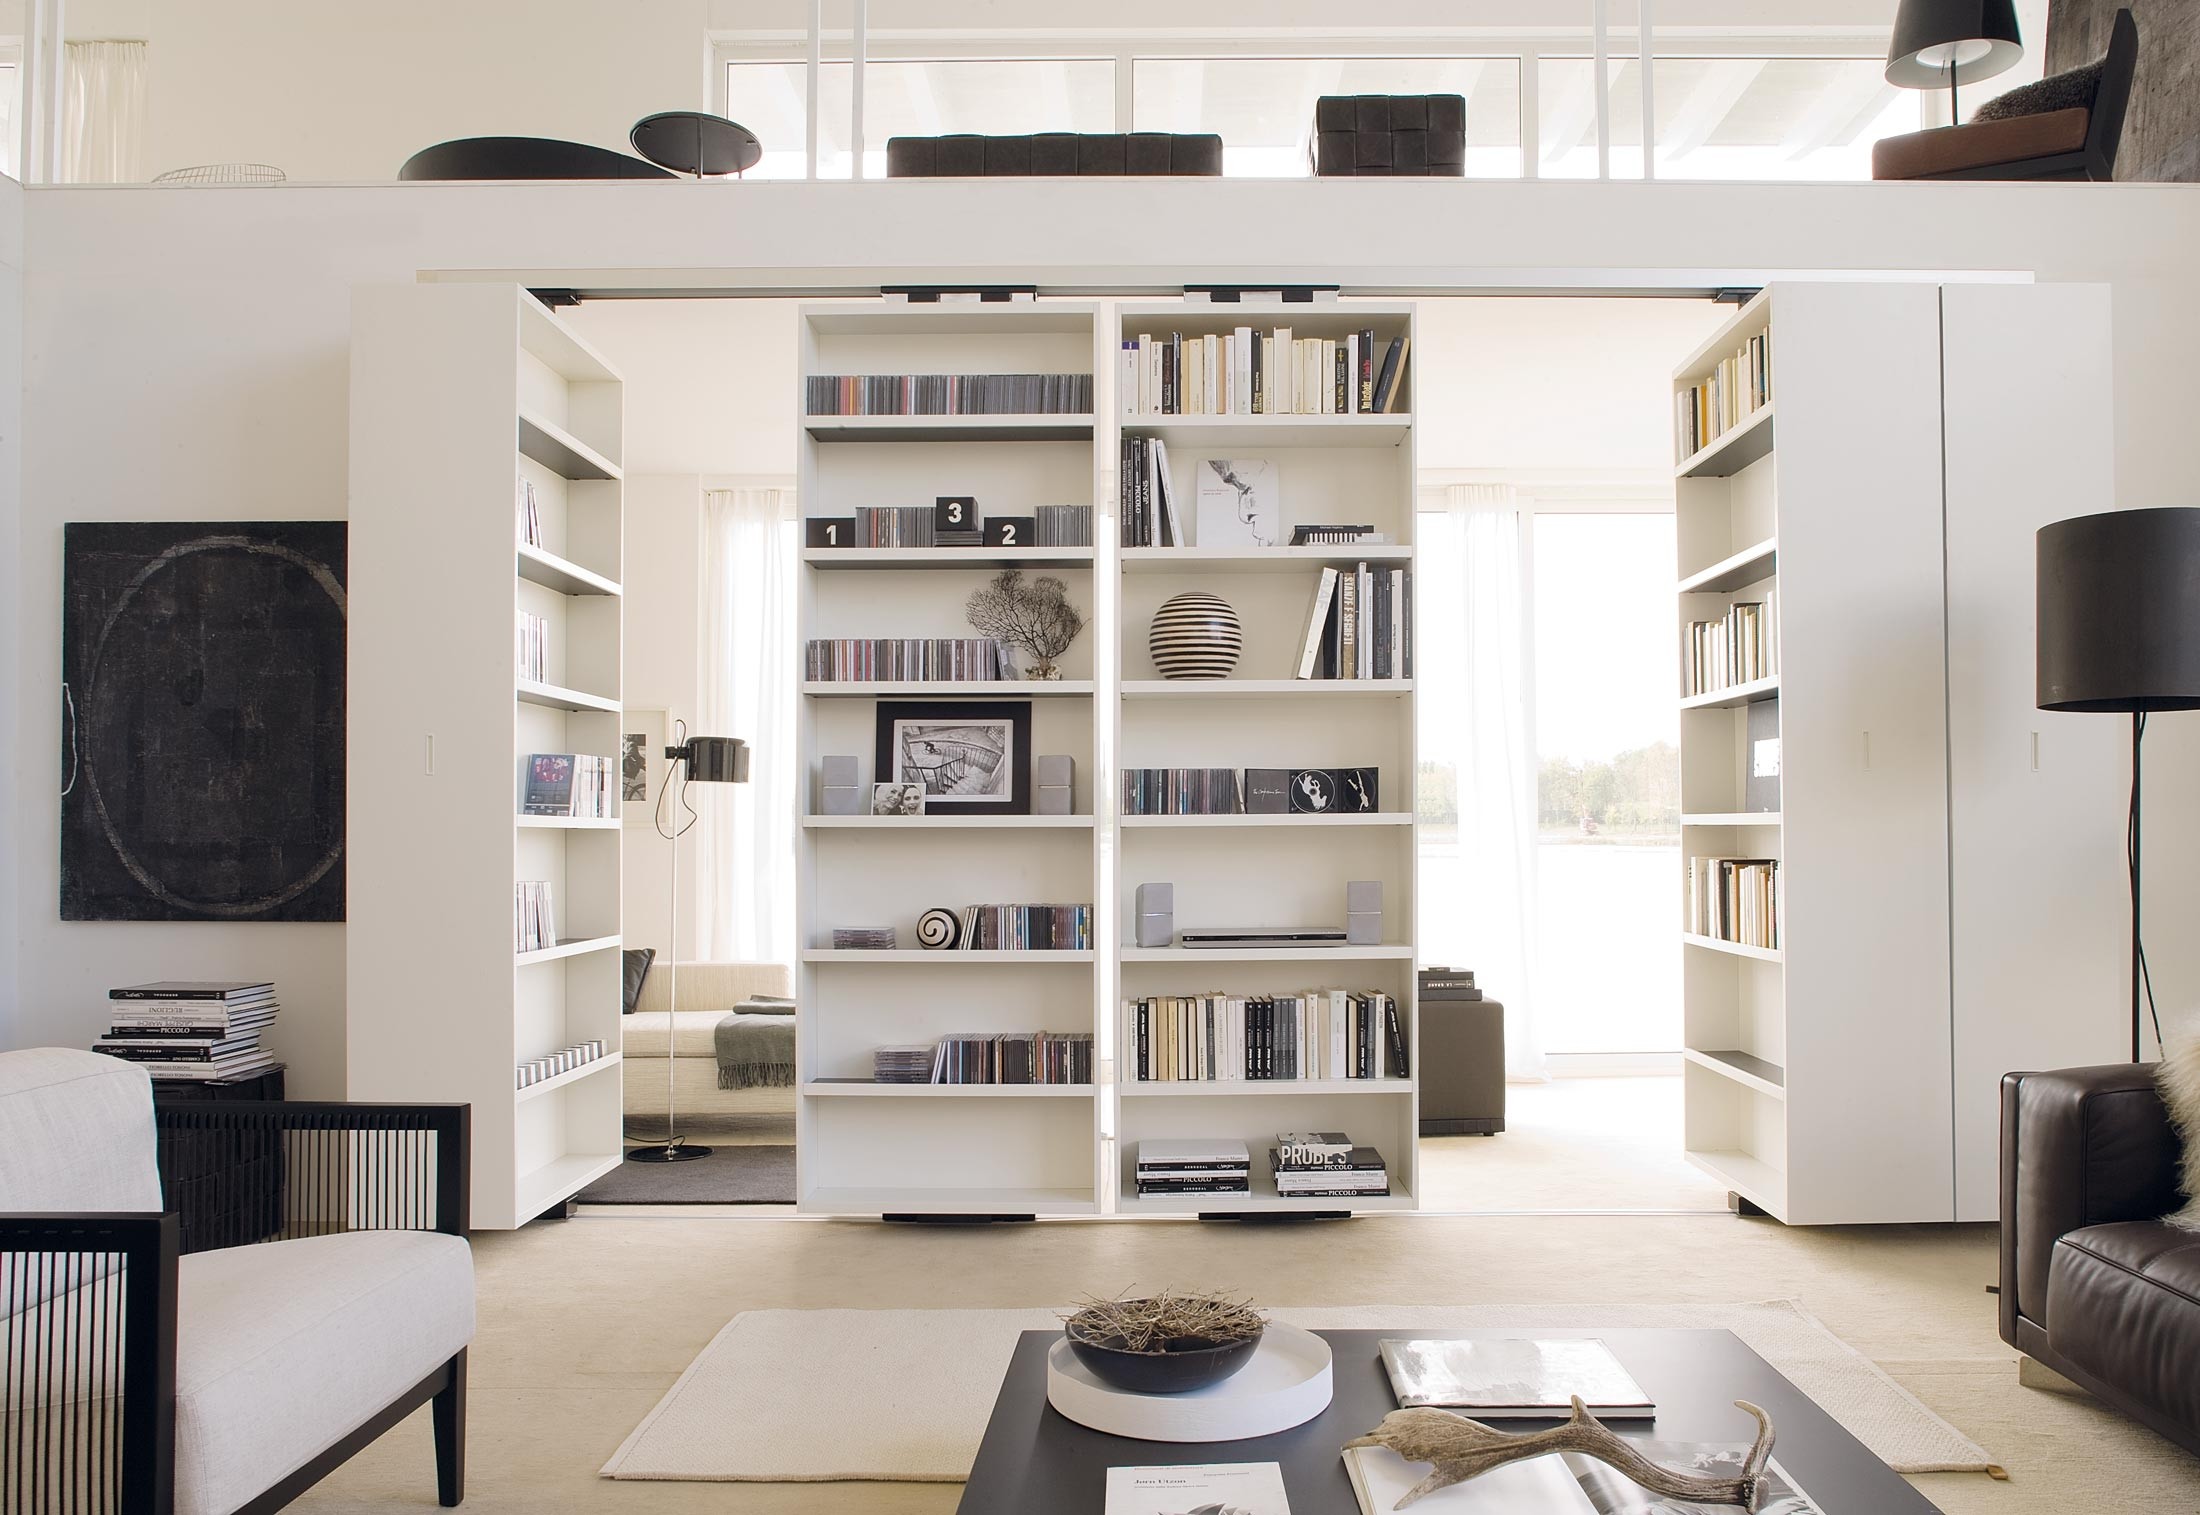 Movable bookshelves